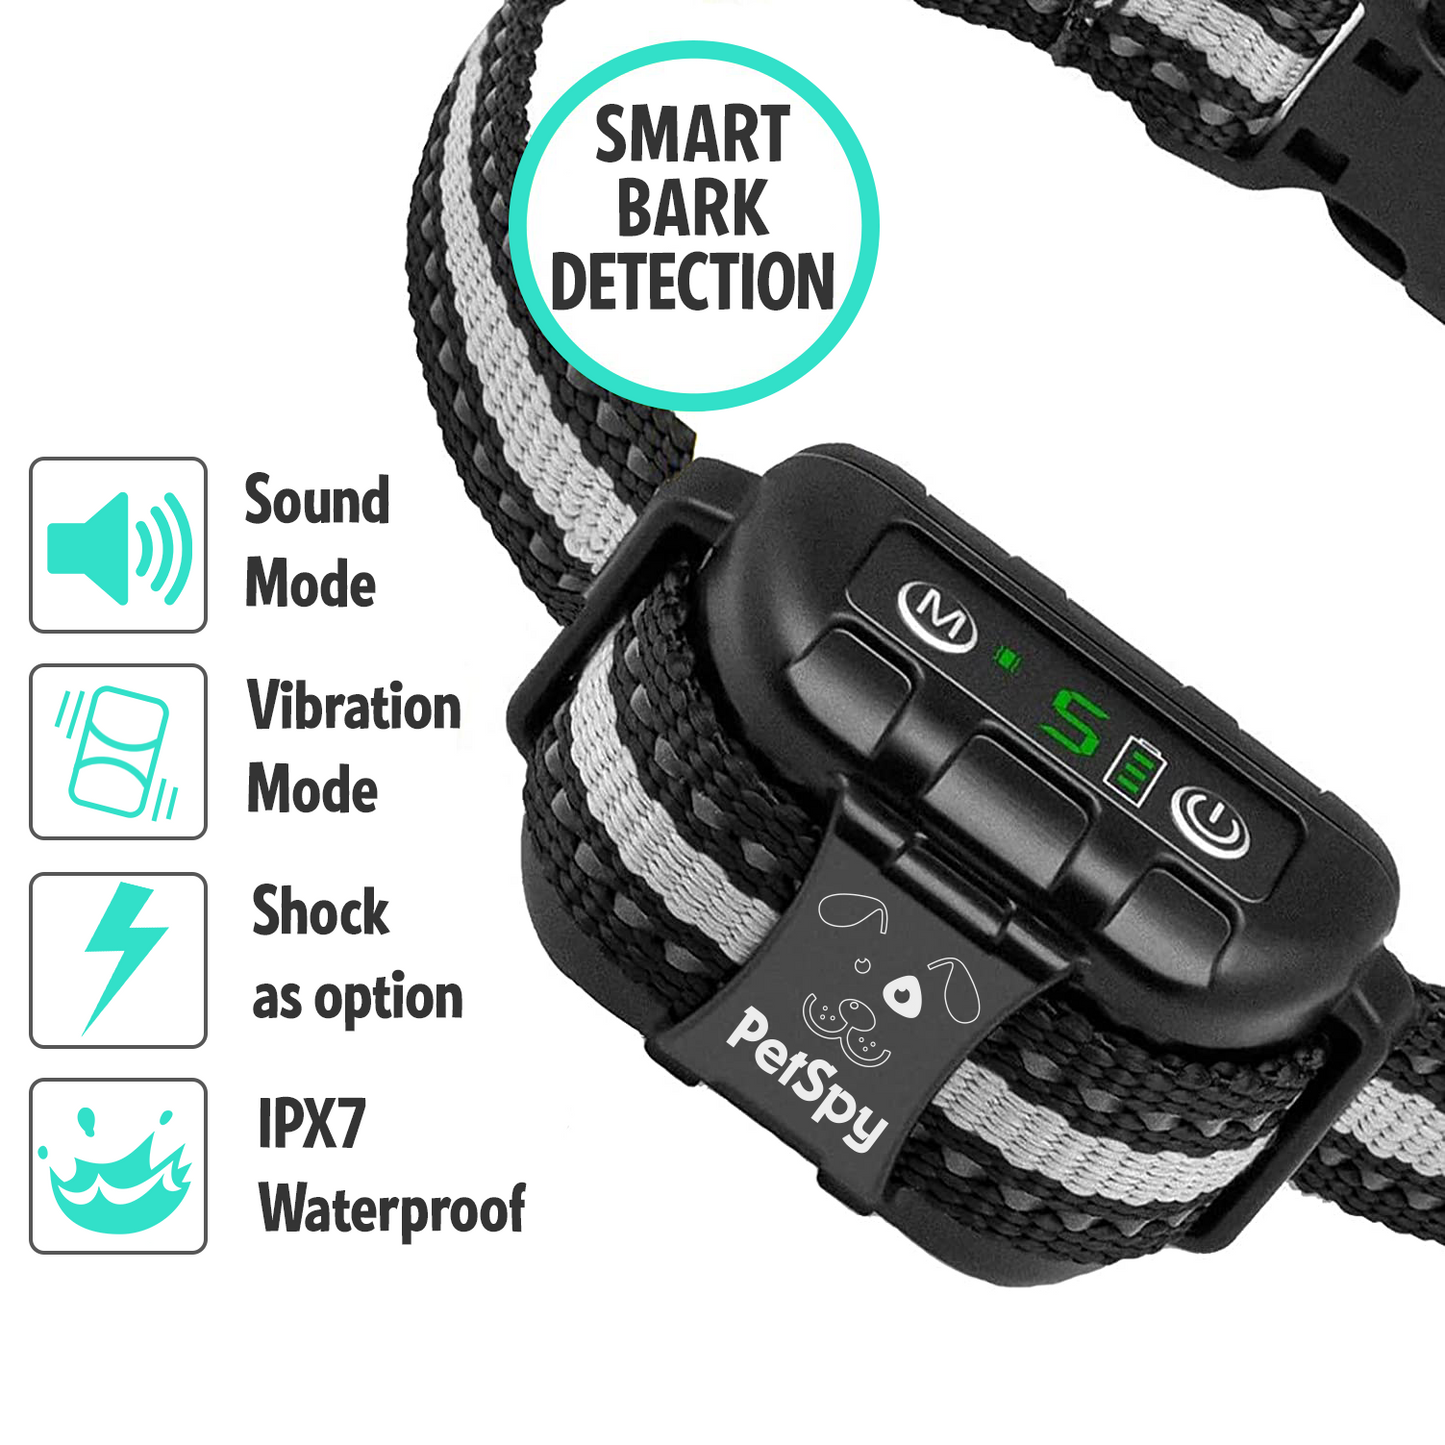 smart dog bark control_smart bark detection_sound mode_vibration mode_shock as option_IPX7 waterproof